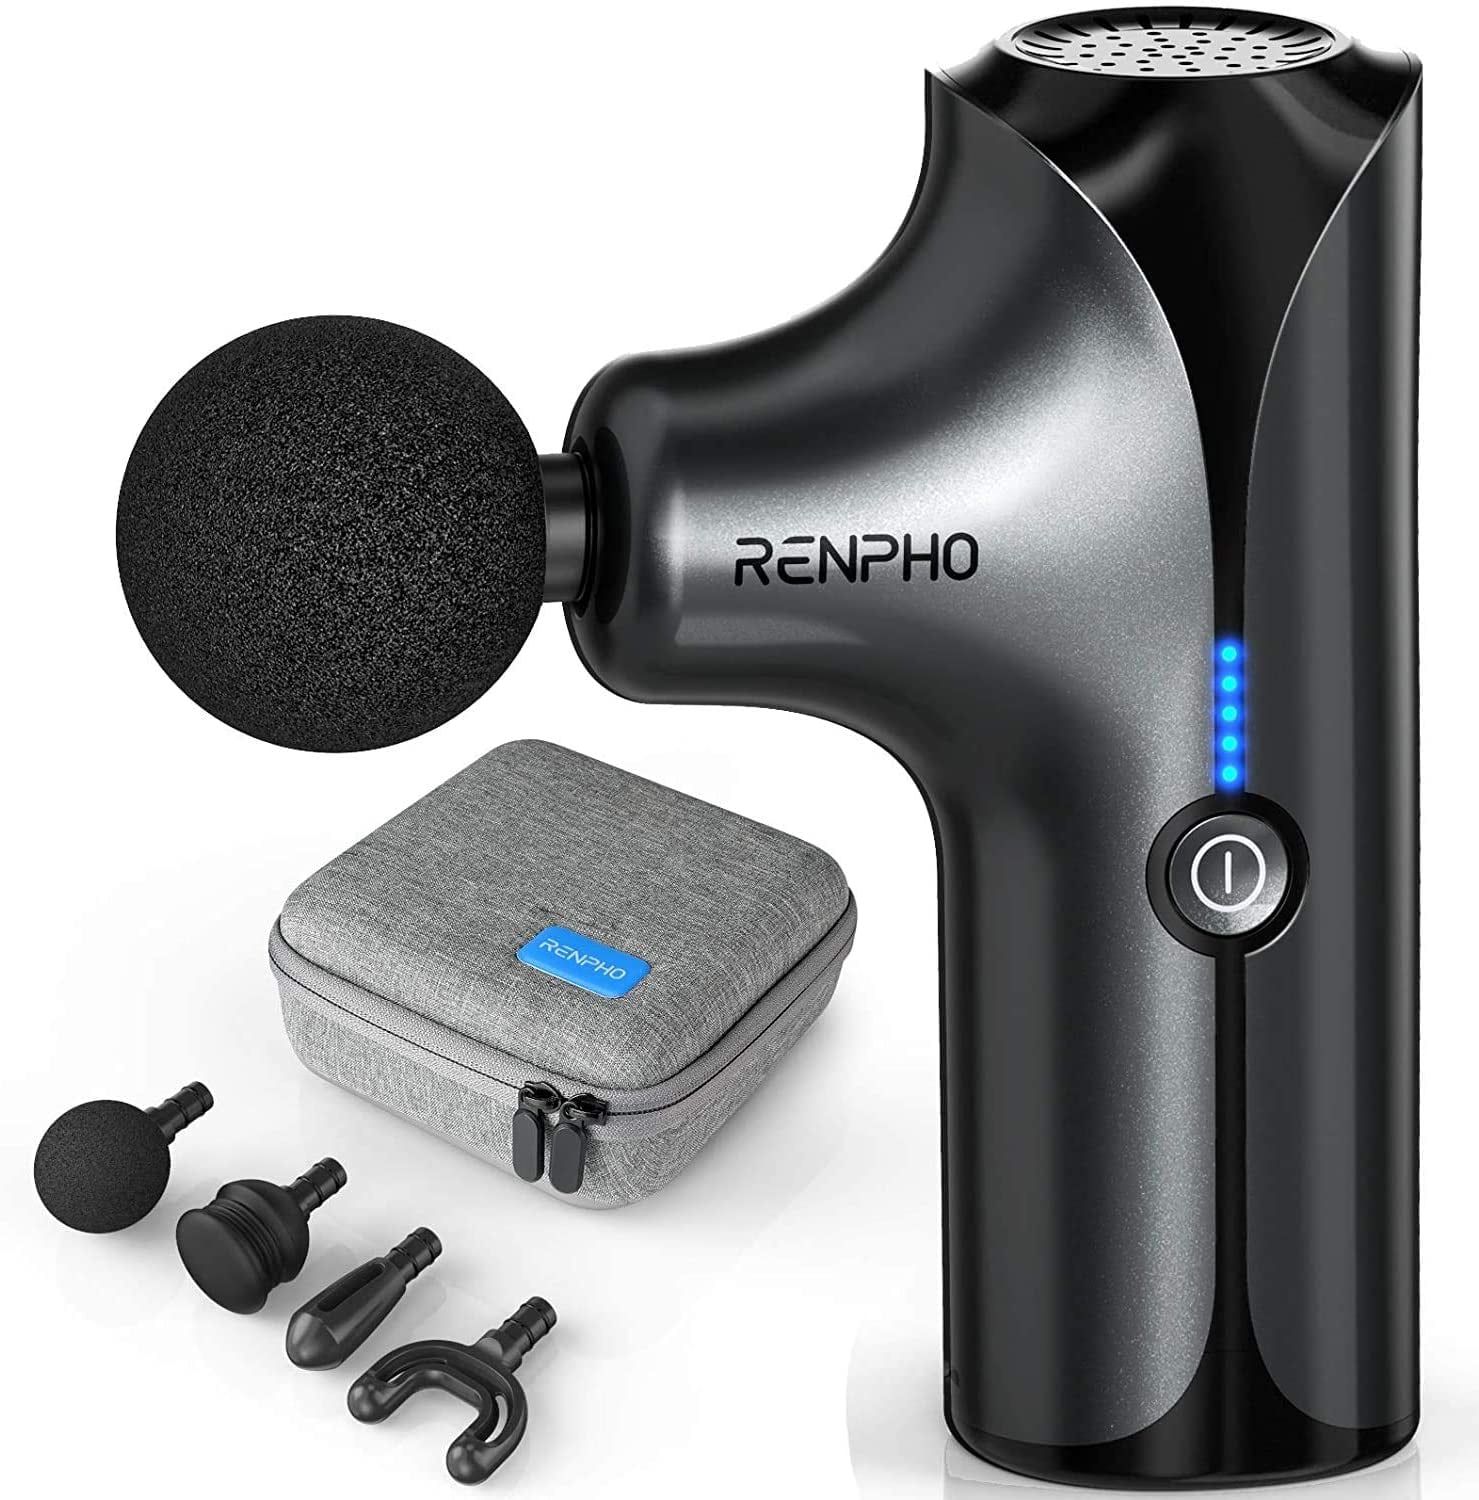 RENPHO Pocket-Sized Deep Tissue Mini Massager Gun with 4 Massage Head & Carry Case, Black